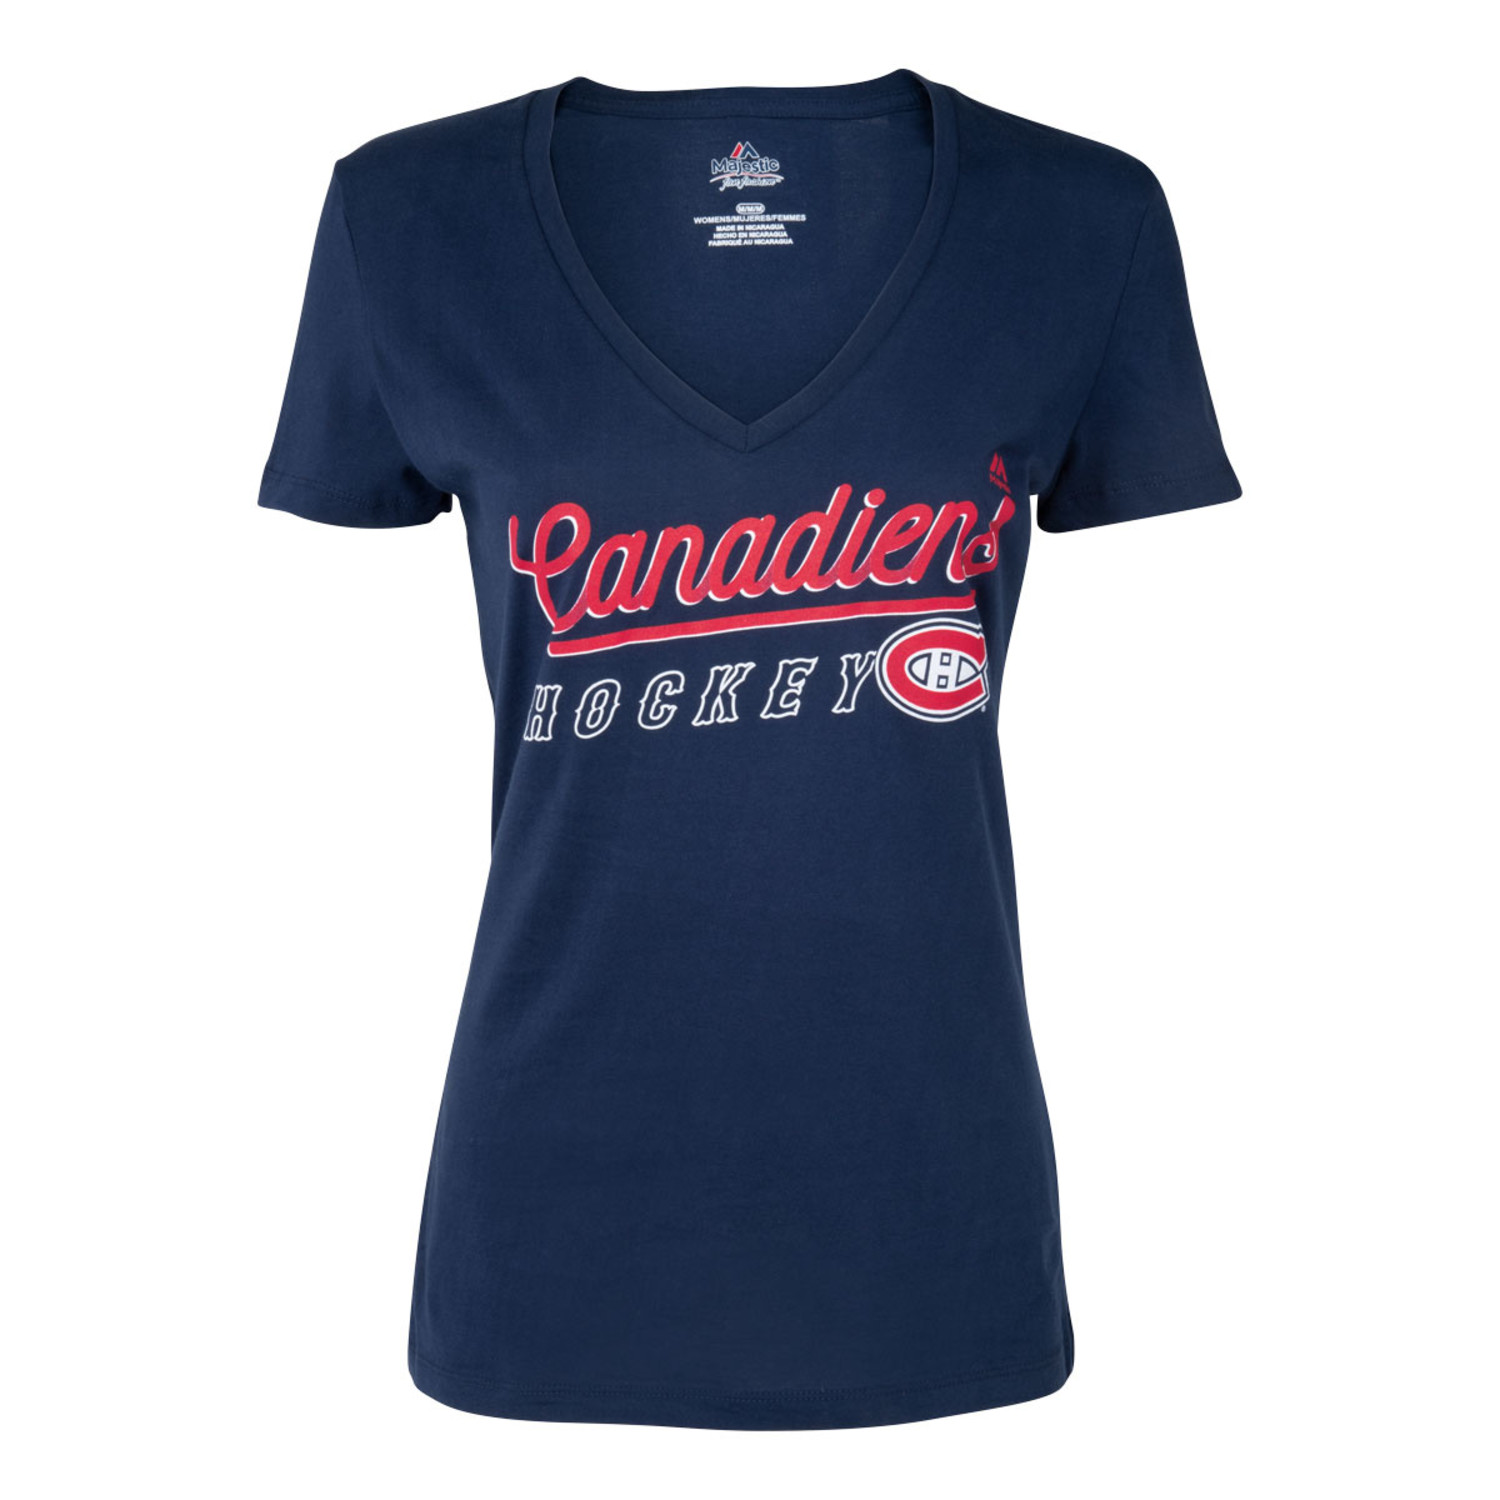 canadiens women's jersey